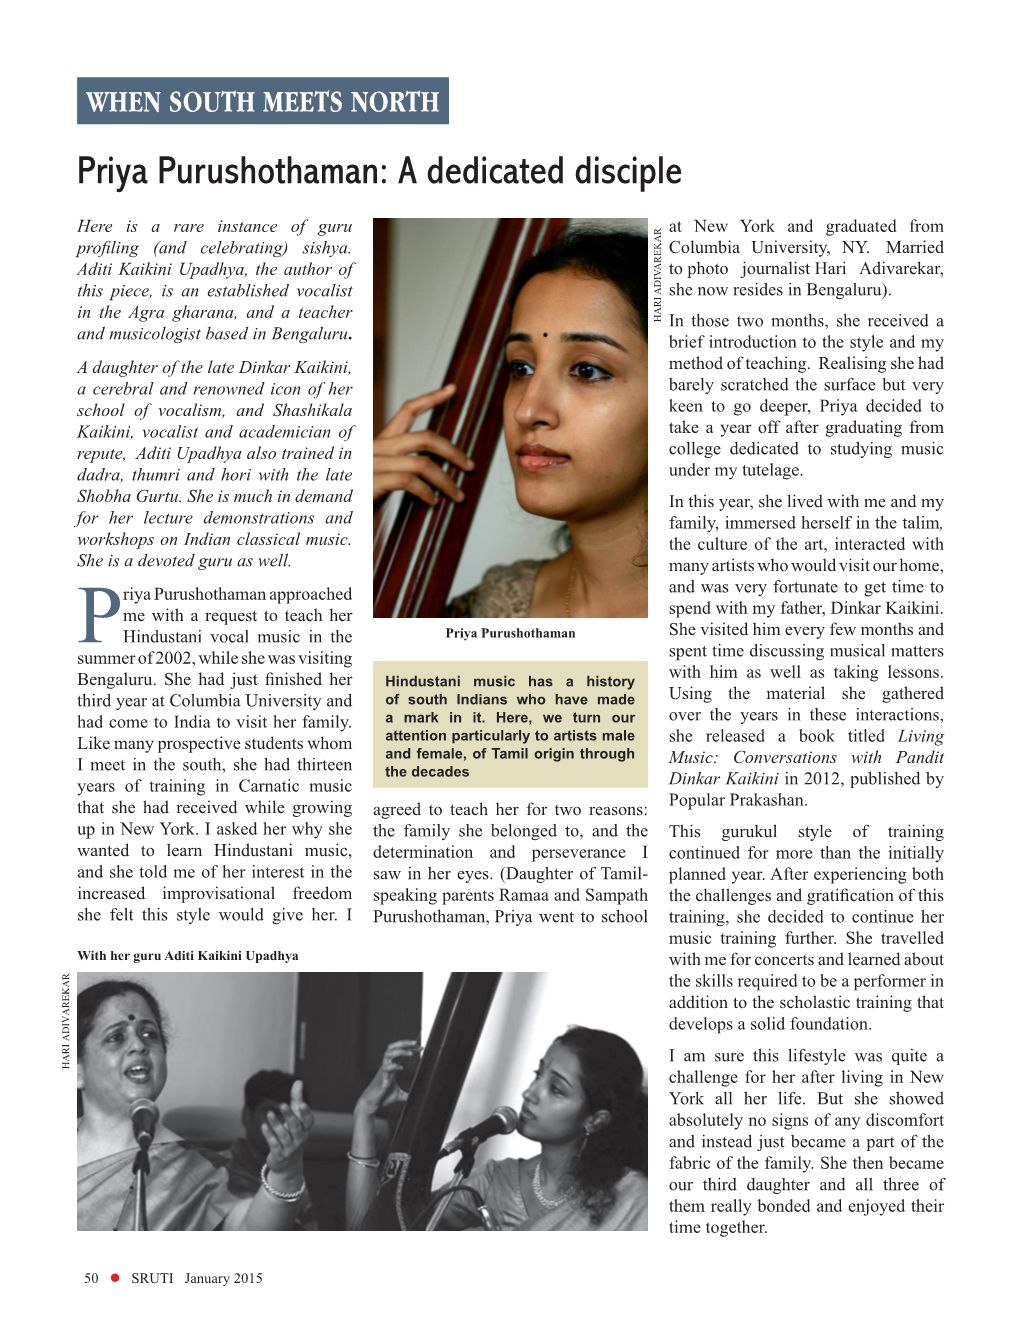 Priya Purushothaman: a Dedicated Disciple